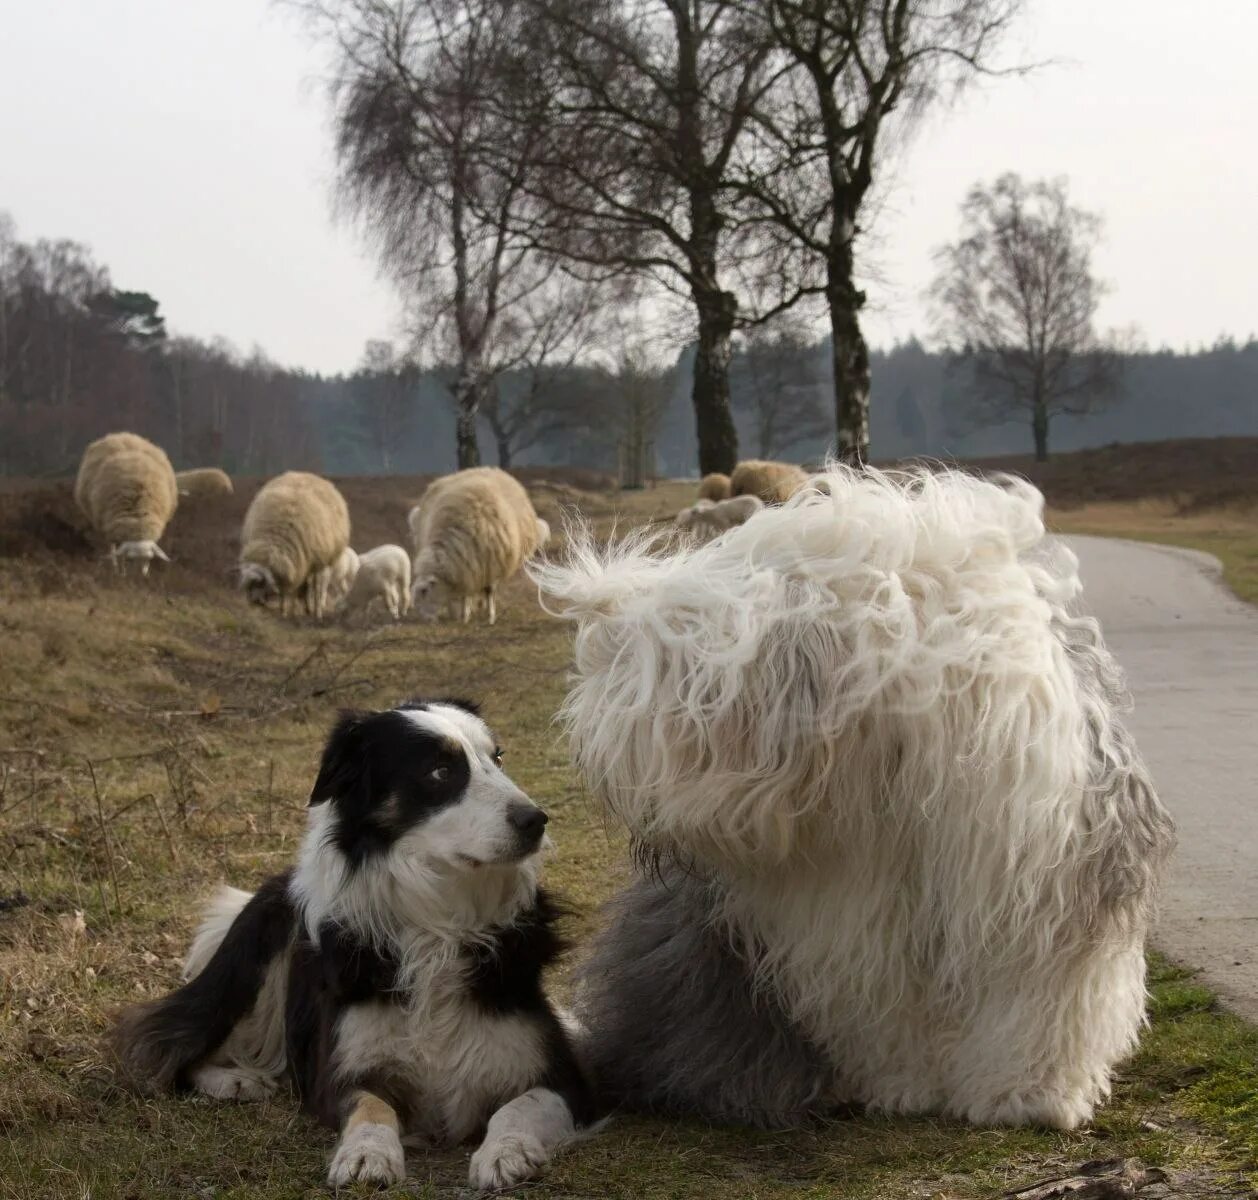 Пасу овечек. Южнорусская овчарка пастух. Южнорусская овчарка пасет овец. Шотландская пастушья бордер колли. Староанглийская овчарка бобтейл.